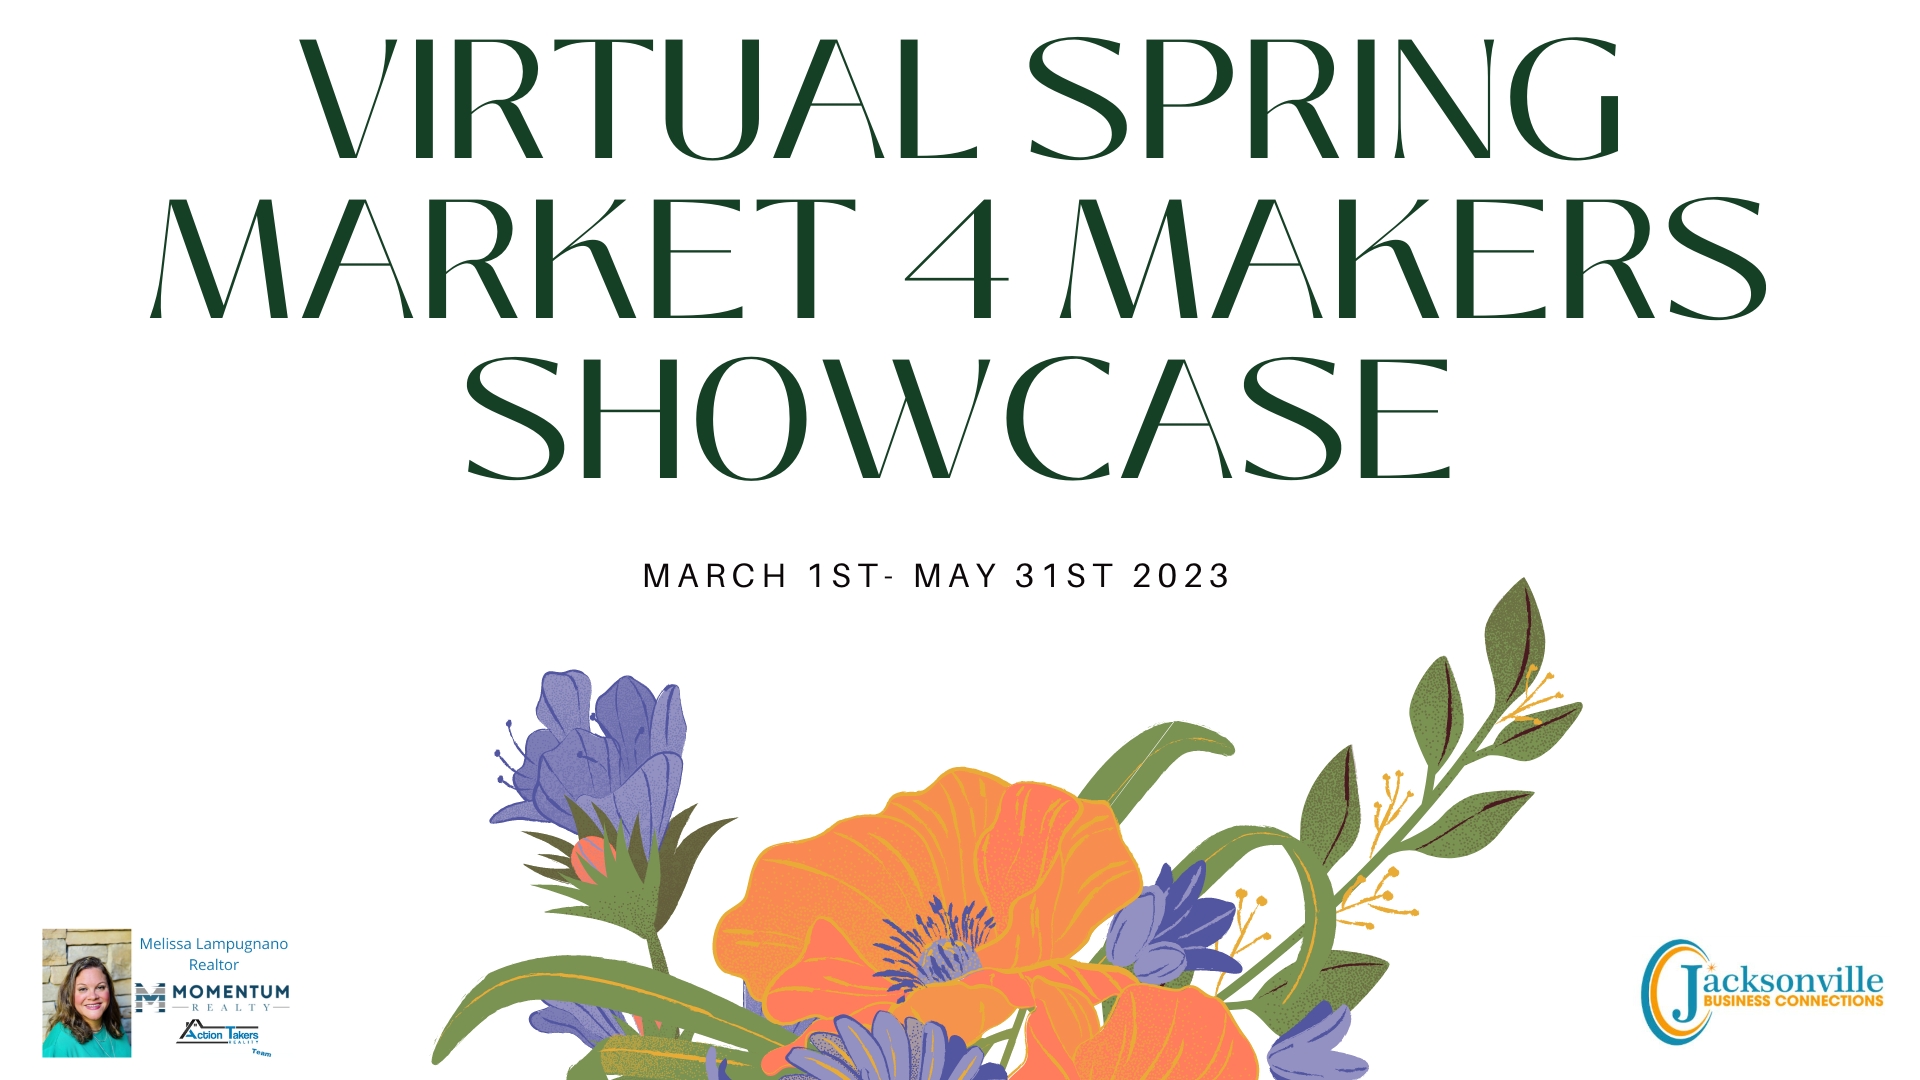 2023 Virtual Spring Market 4 Makers